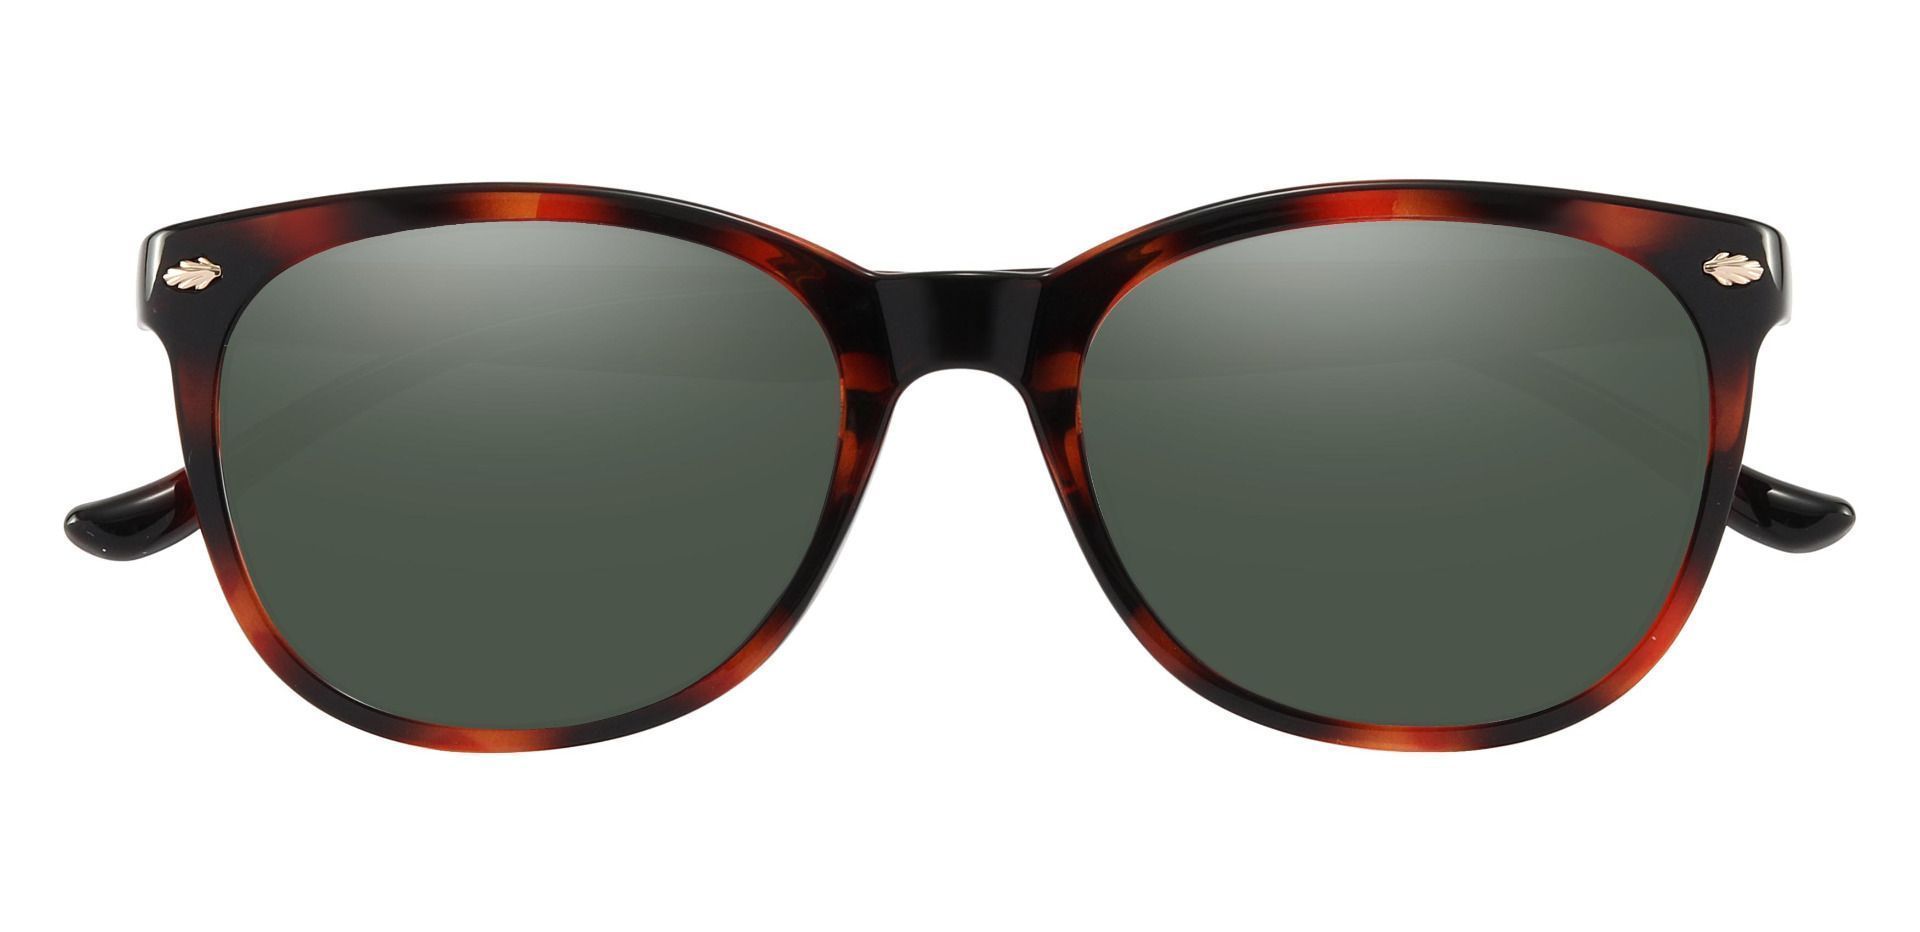 Pavilion Square Reading Sunglasses - Tortoise Frame With Green Lenses